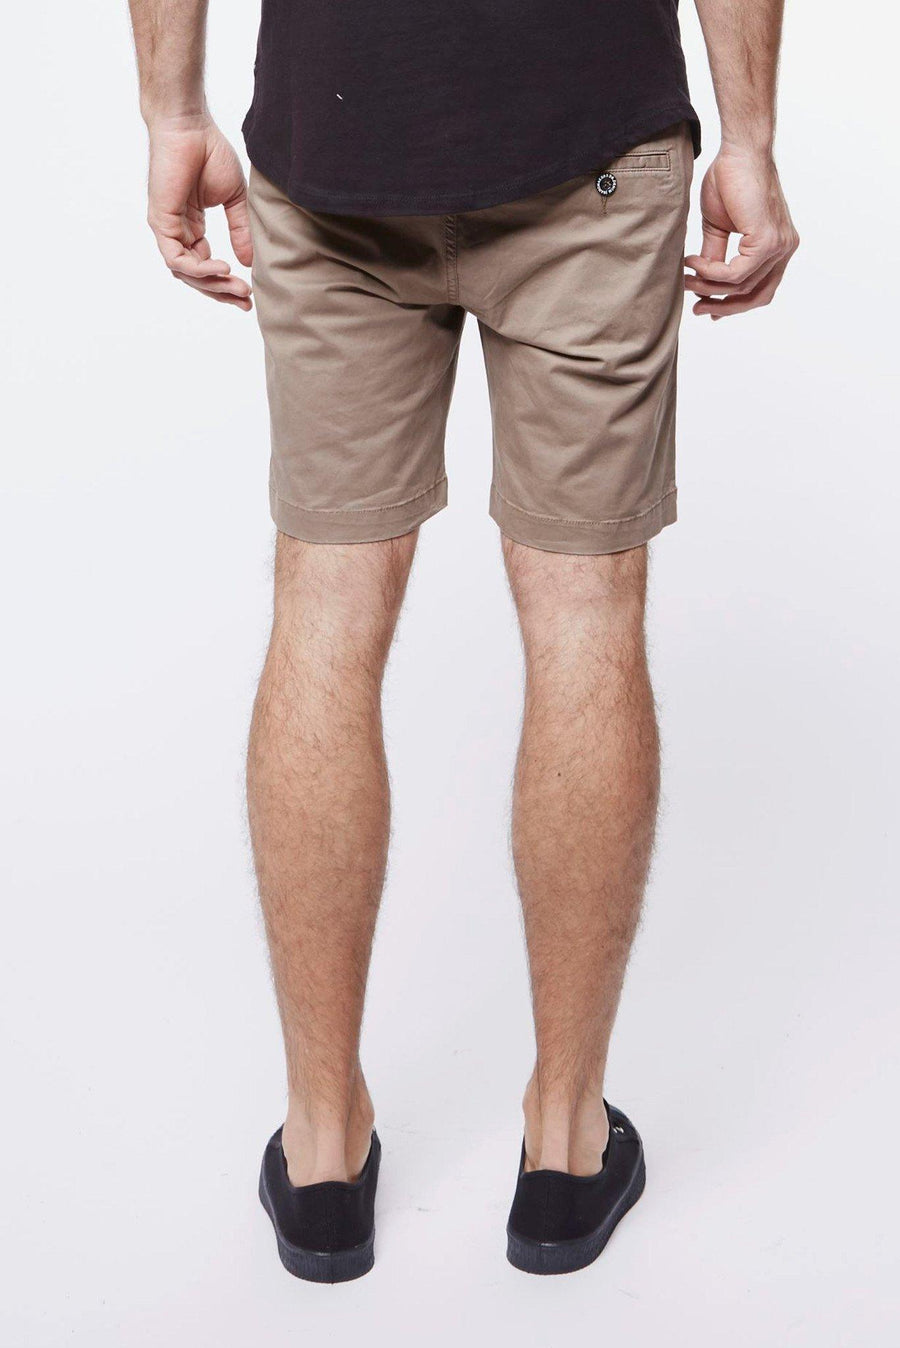 Wood Shorts Camel - Dr Denim Jeans - Australia & NZ